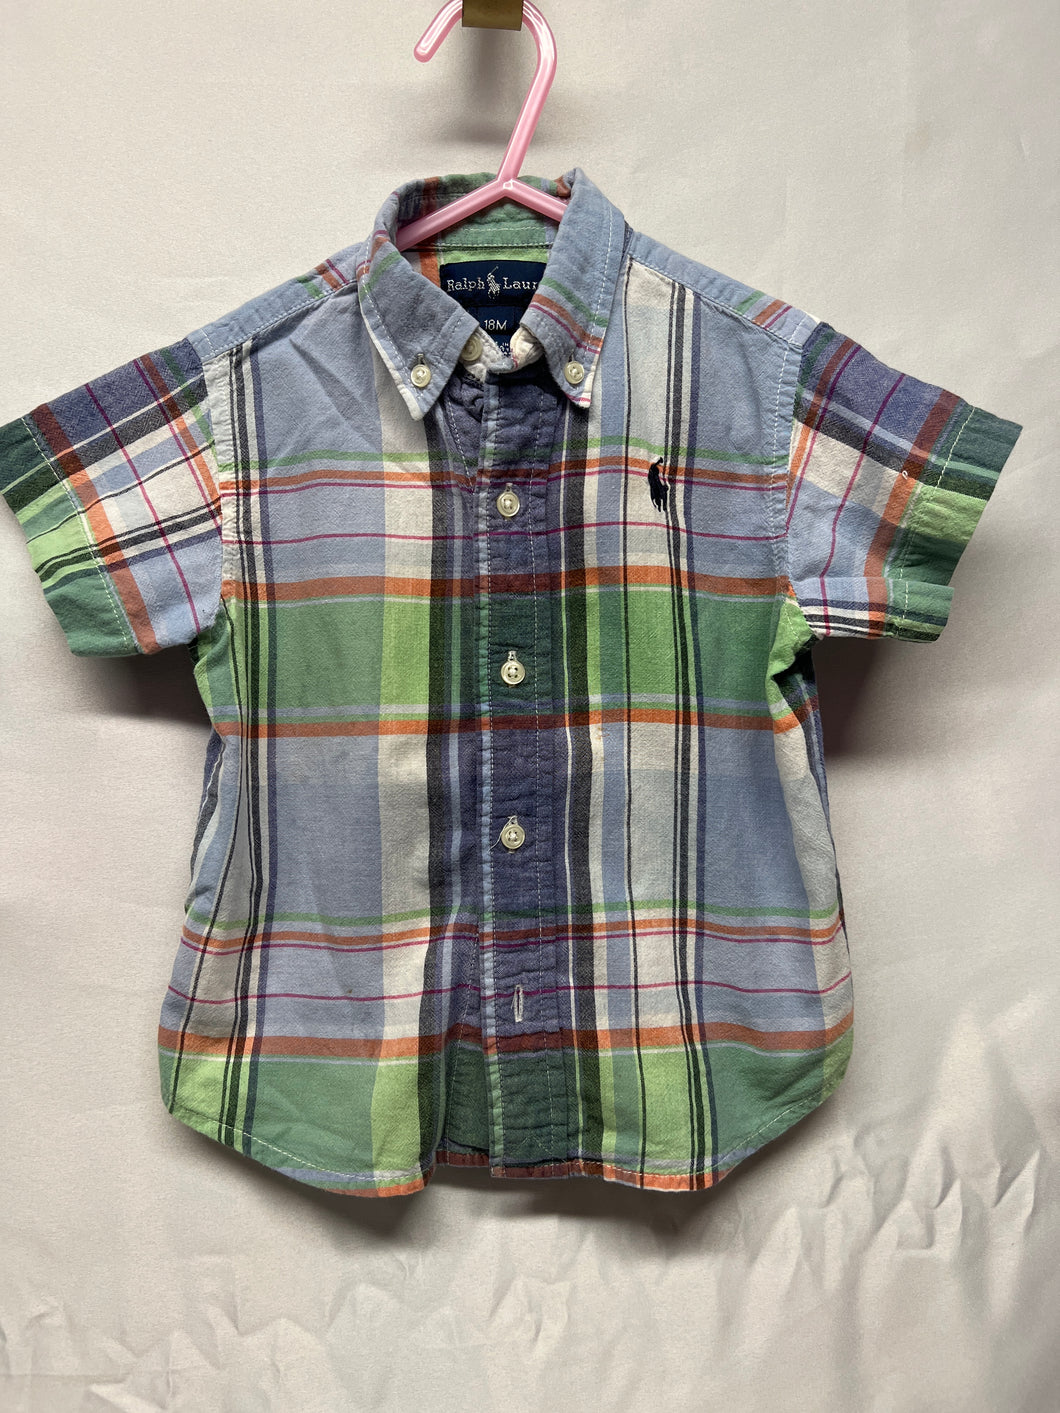 Ralph Lauren button up collared shirt, blue, green, and orange plaid 18 months